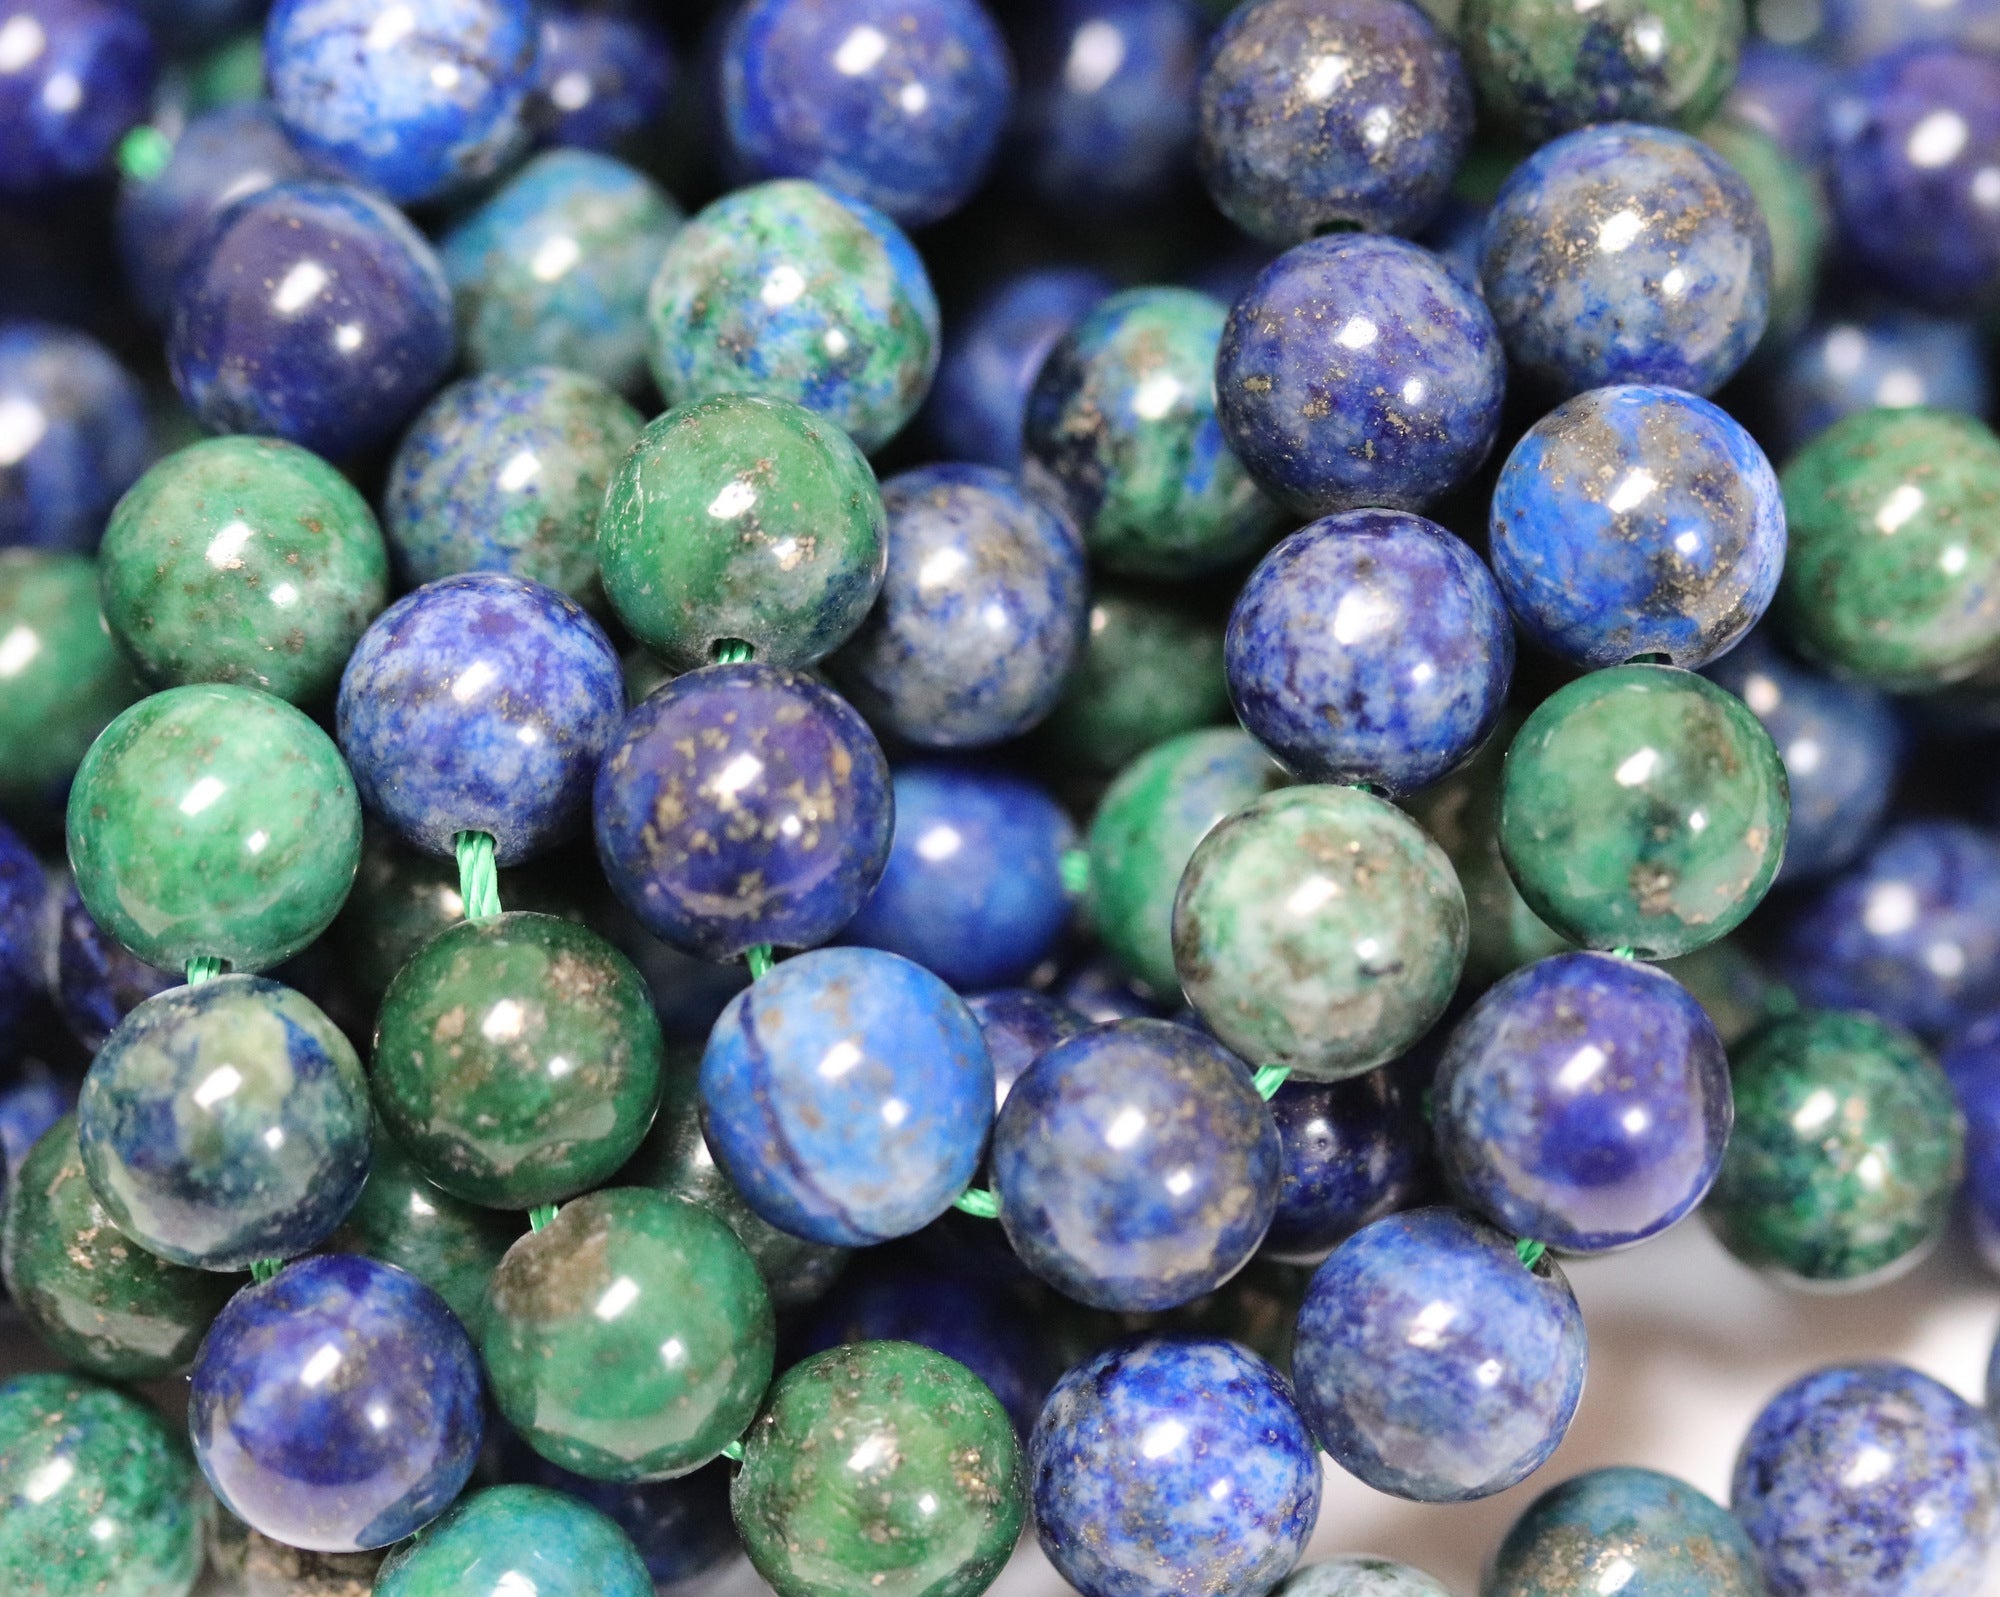 Lapis Lazuli in Chrysocolla 8mm round polished beads 15.5" strand - Oz Beads 